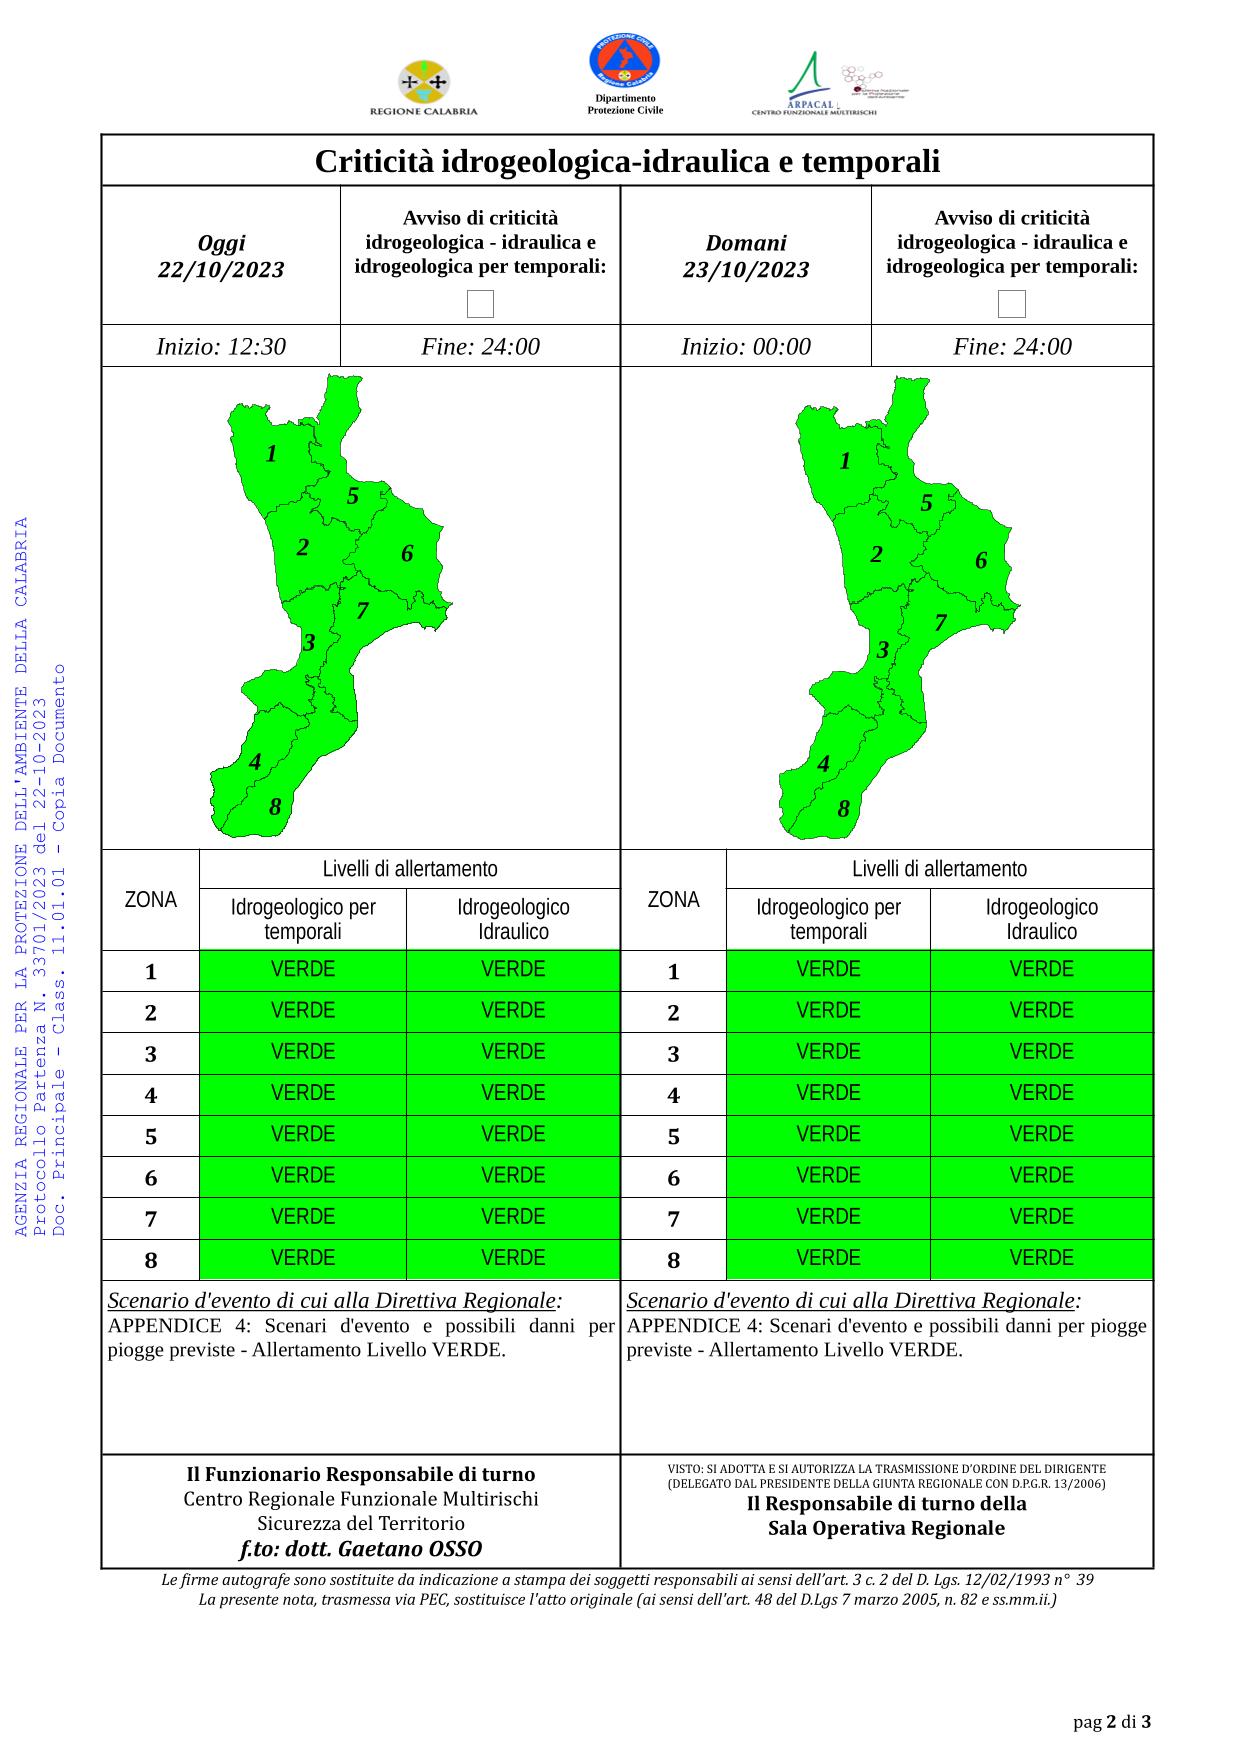 Criticità idrogeologica-idraulica e temporali in Calabria 22-10-2023